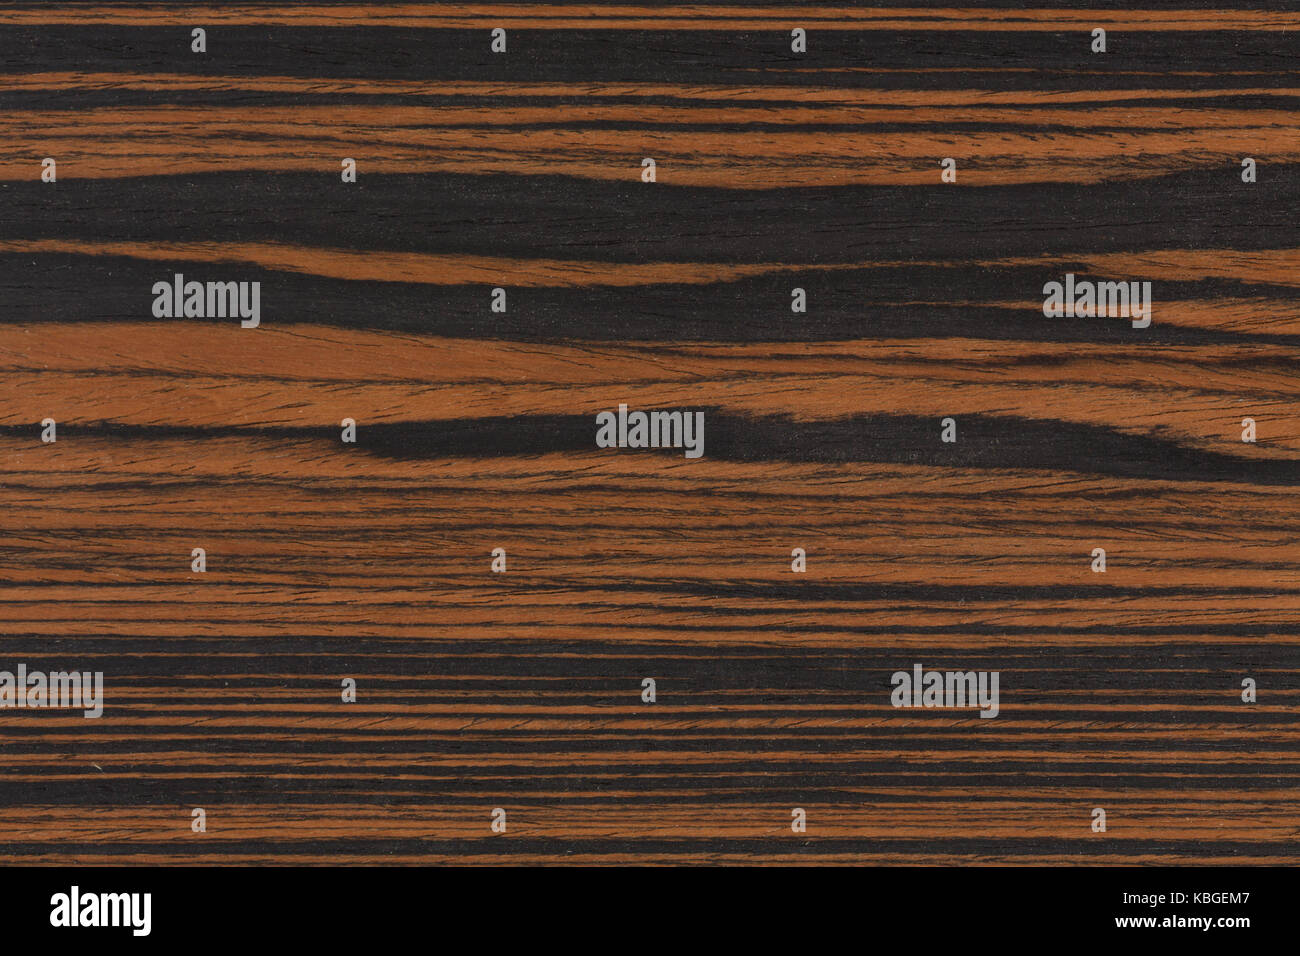 Closeup ebony wood surface as background. Stock Photo